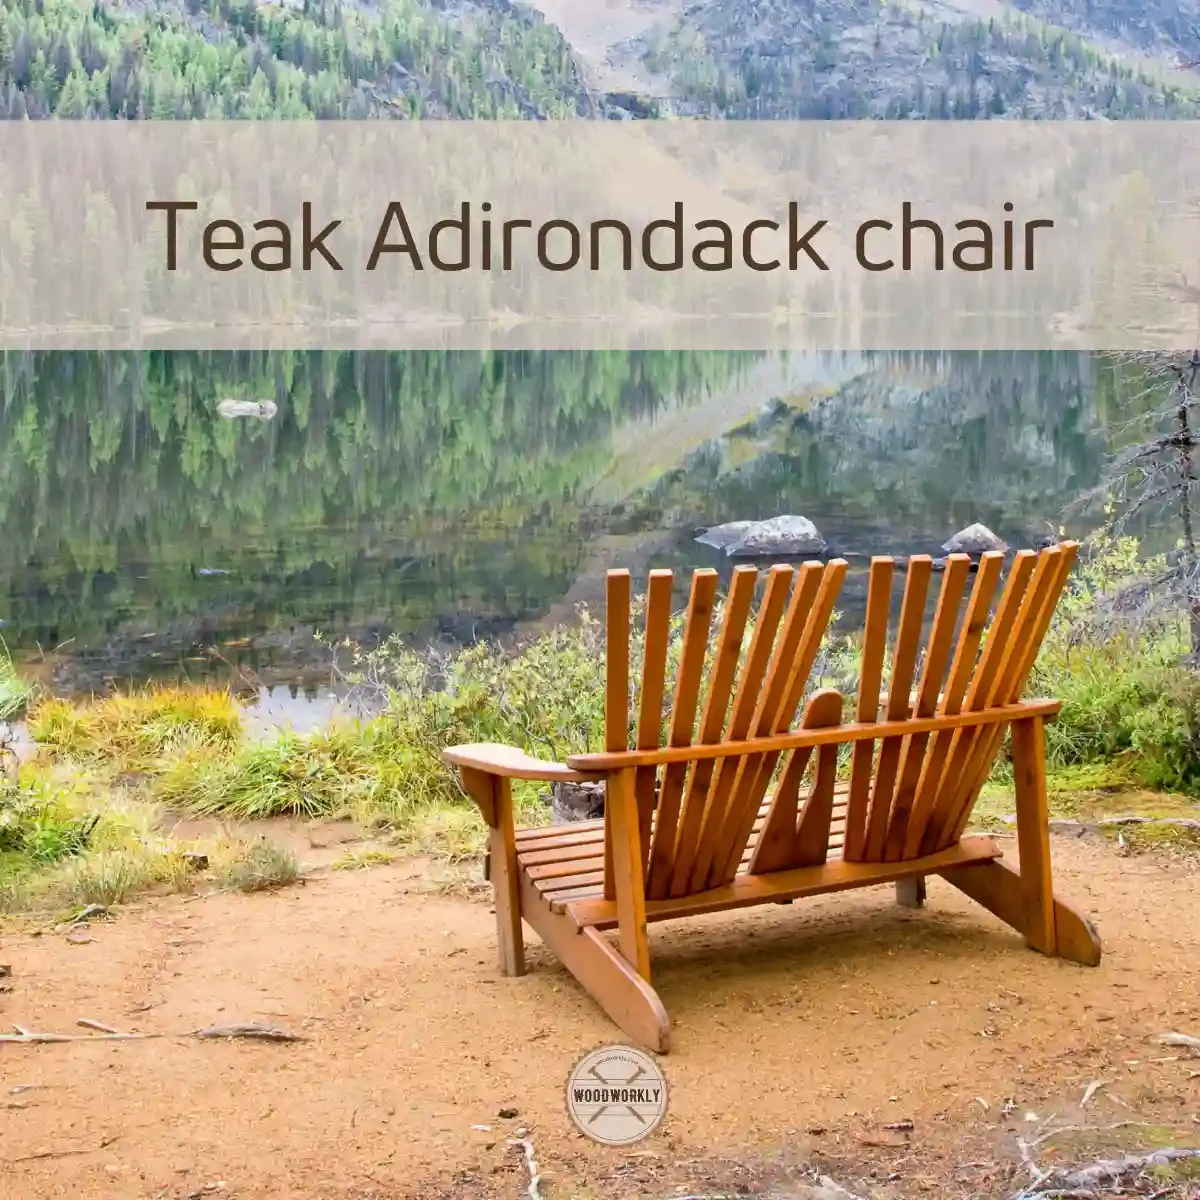 Teak Adirondack chair